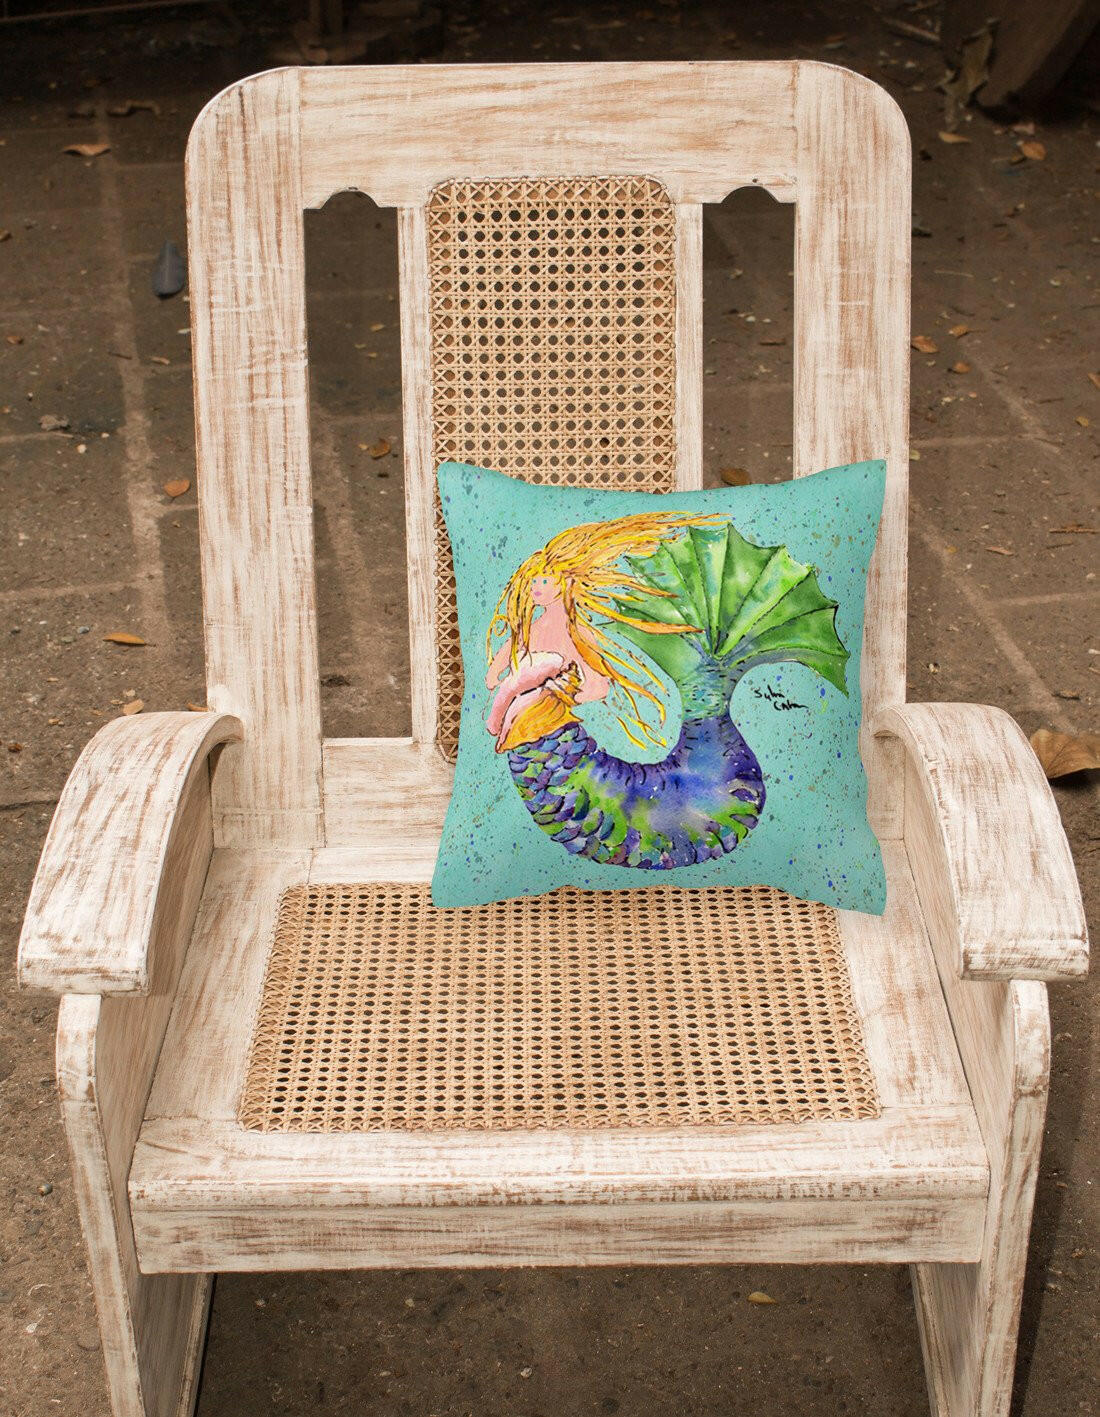 Mermaid Decorative   Canvas Fabric Pillow - the-store.com